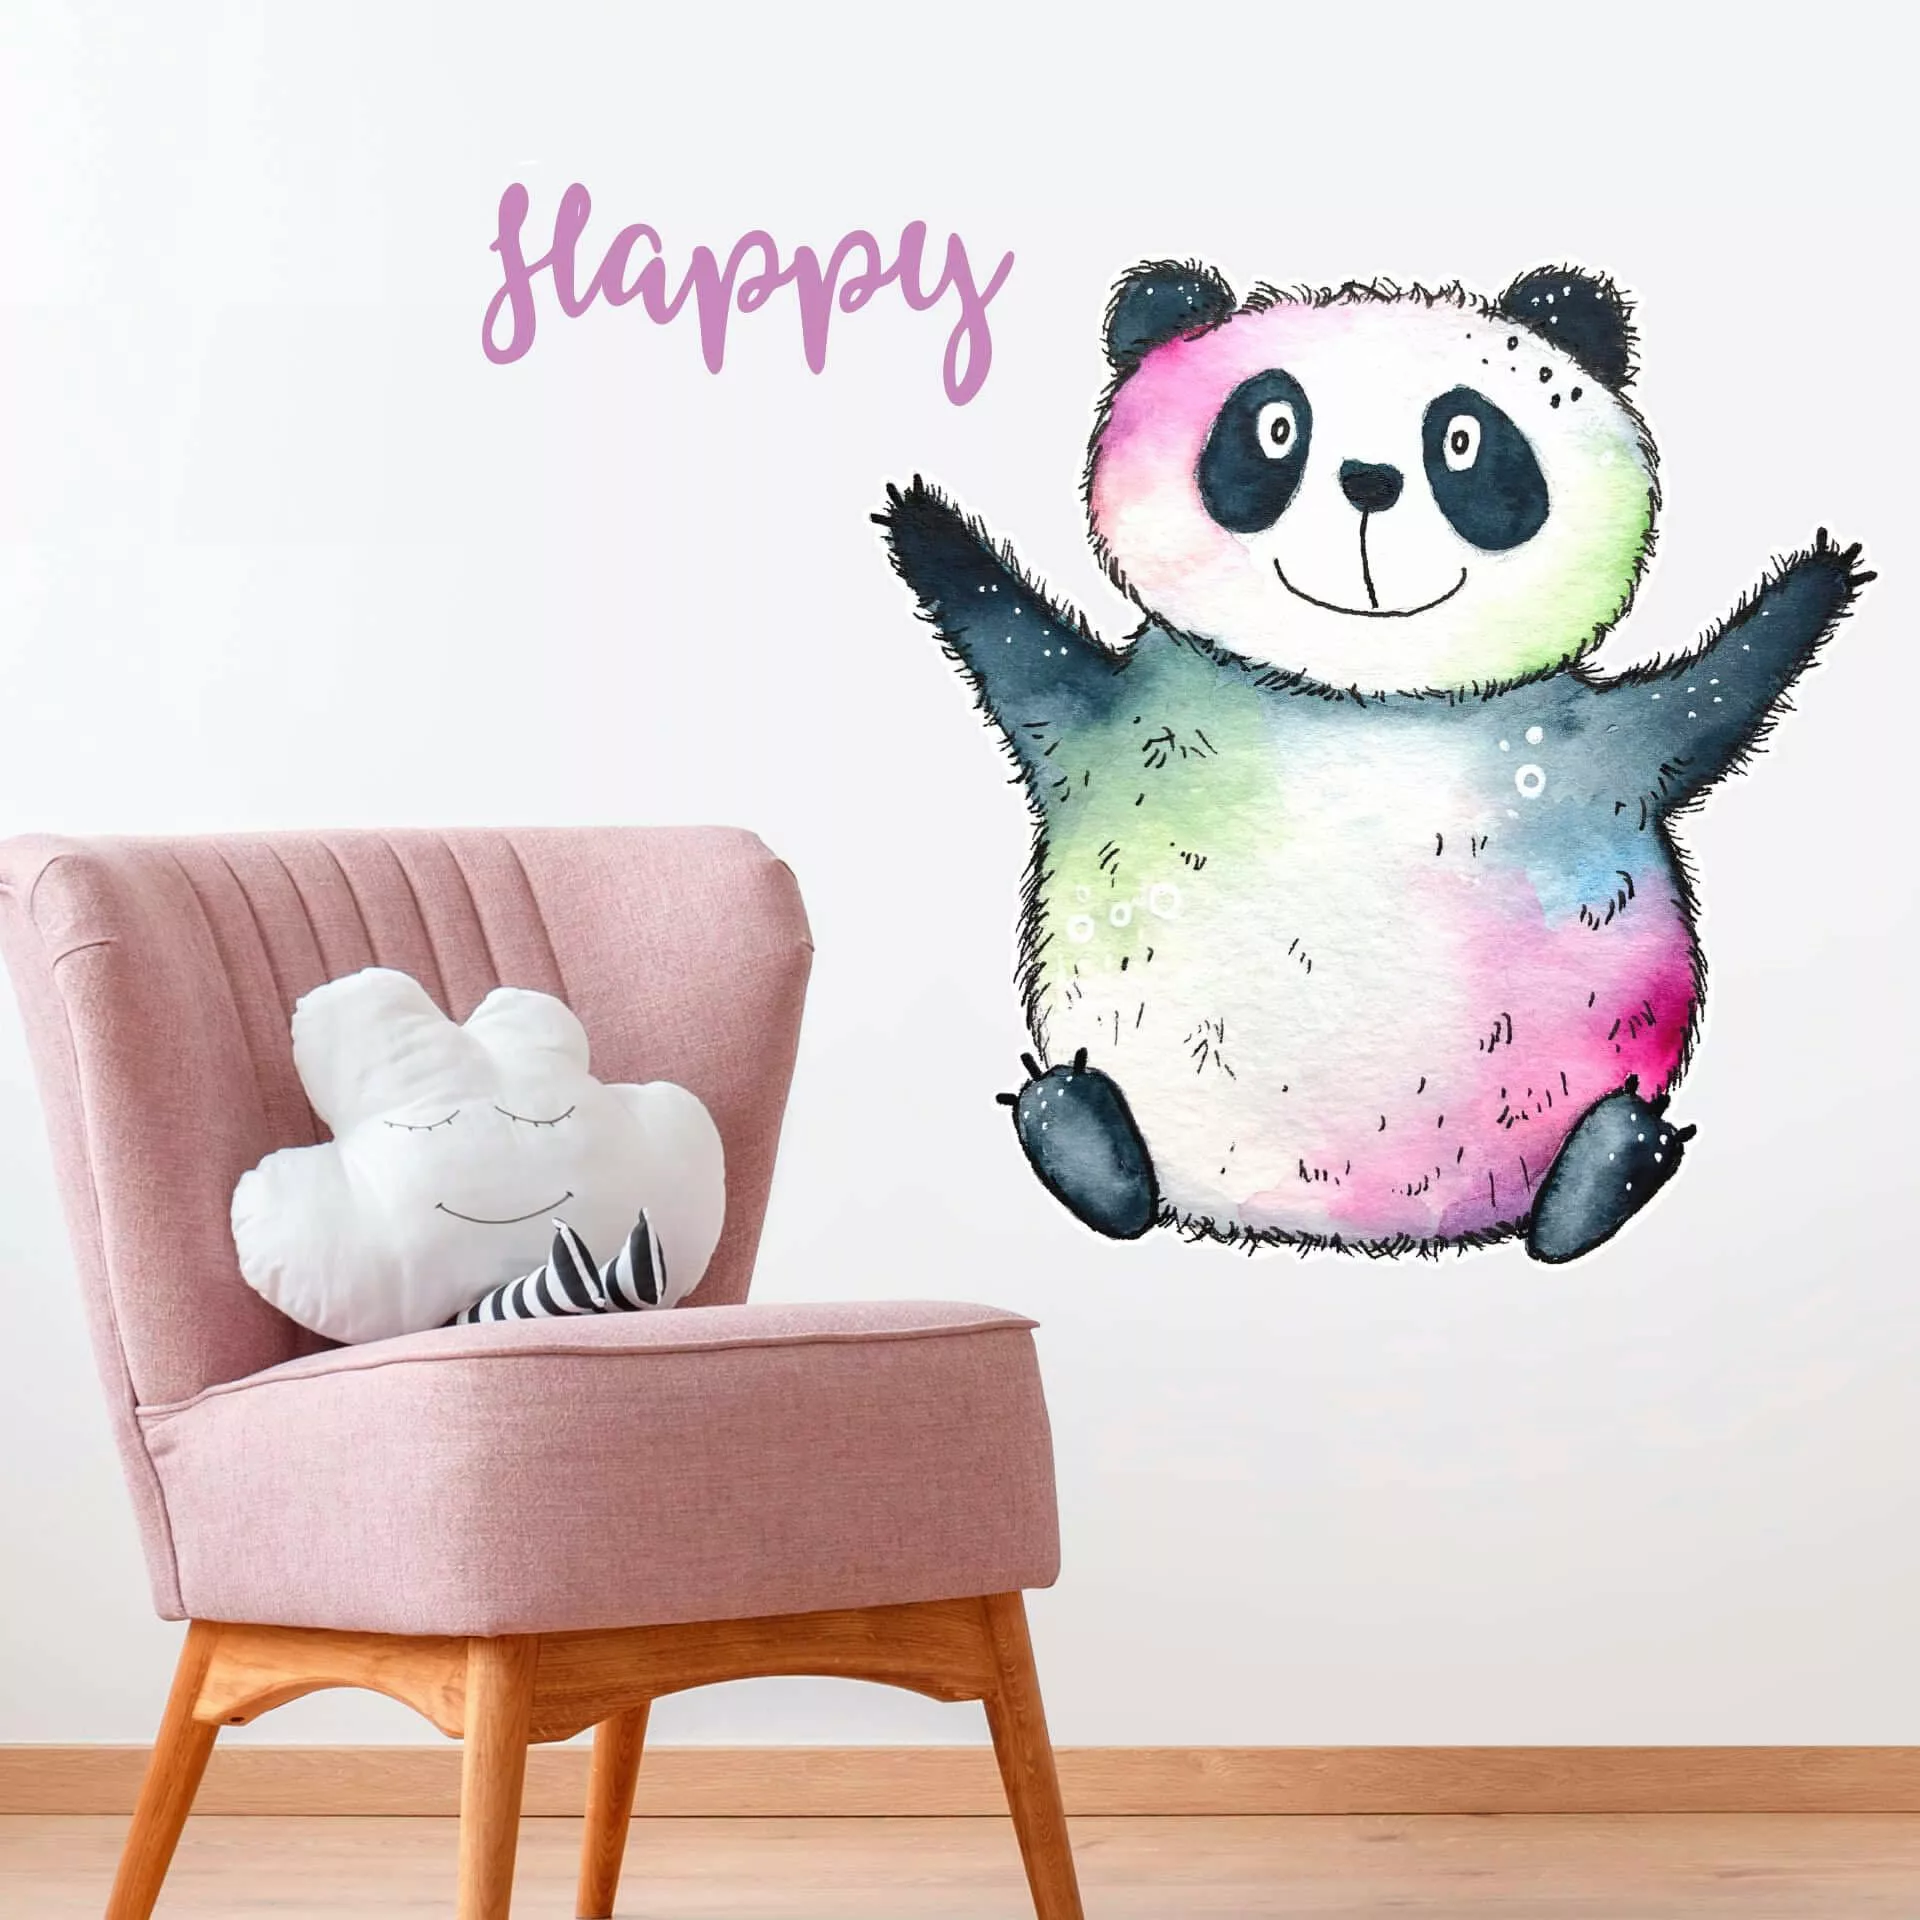 Wall-Art Wandtattoo »Happy Panda«, selbstklebend, entfernbar günstig online kaufen